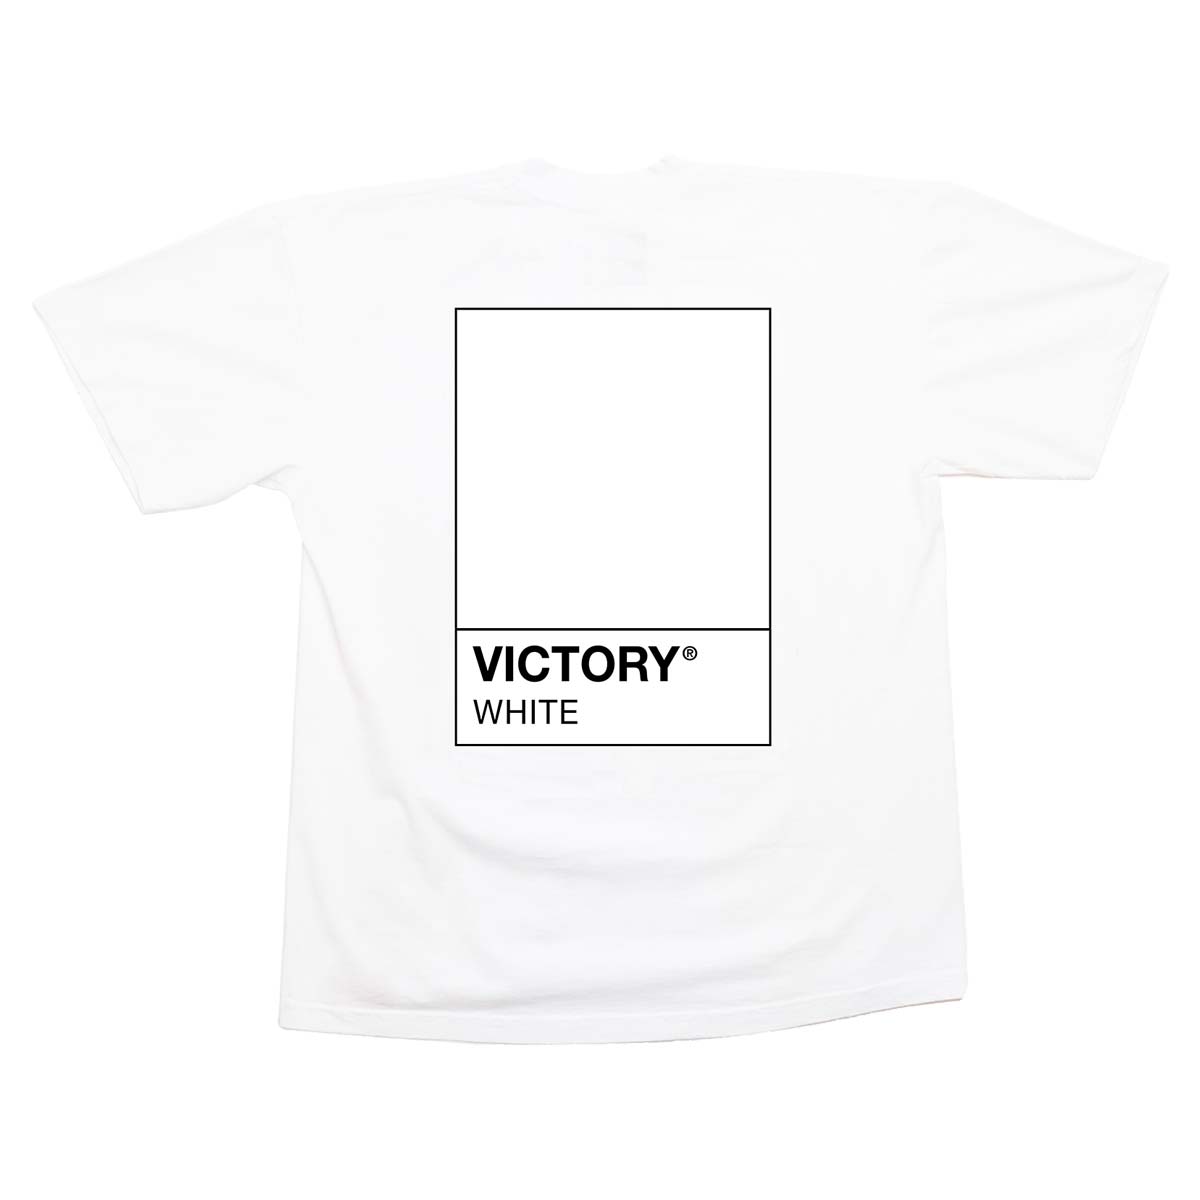 Victory Lap VL T-Shirt - Red/White – The Marathon Clothing